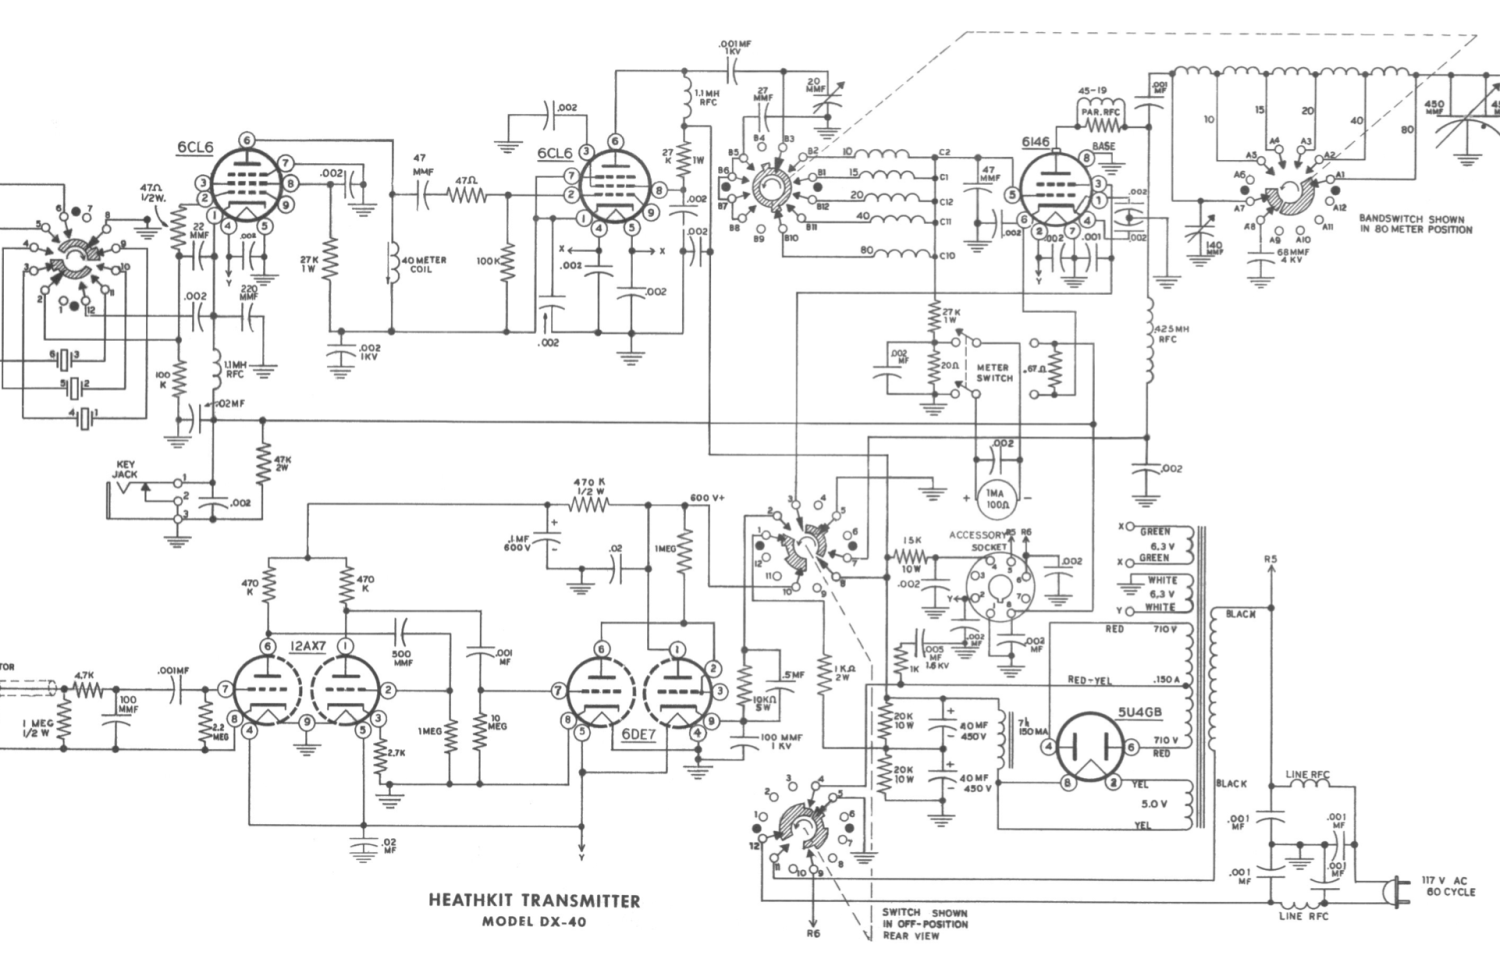 Heathkit DX-40 Amateur Transmitter - Schematic Diagram